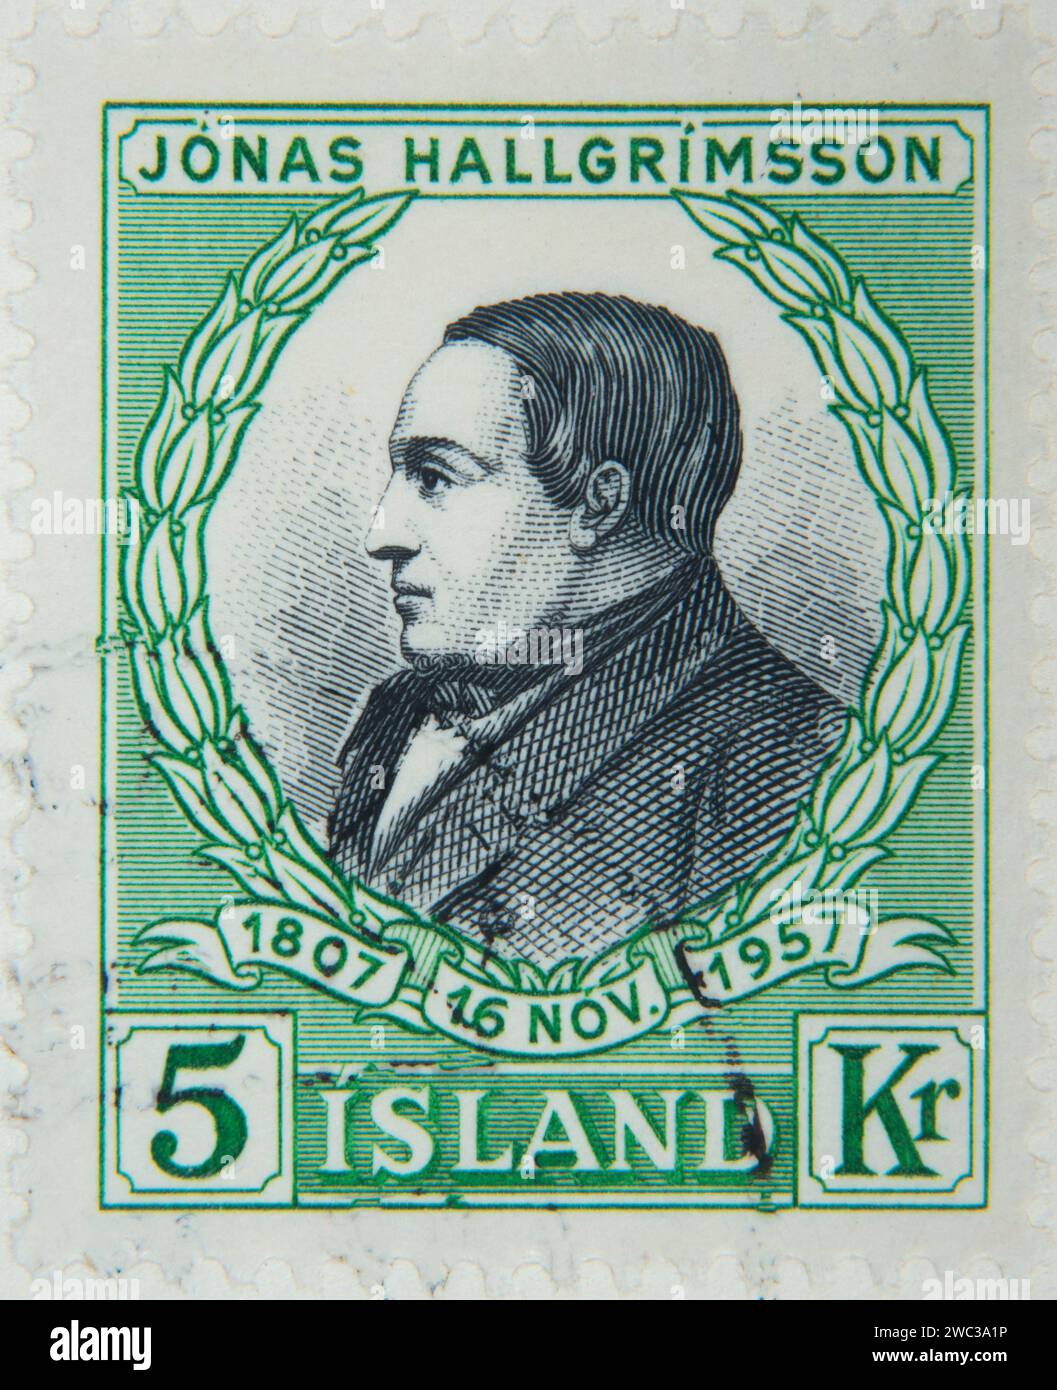 Jonas Hallgrimsson (1807 â€“ 1845) was an Icelandic poet, author and naturalist. Portrit on an Icelandic stamp Stock Photo